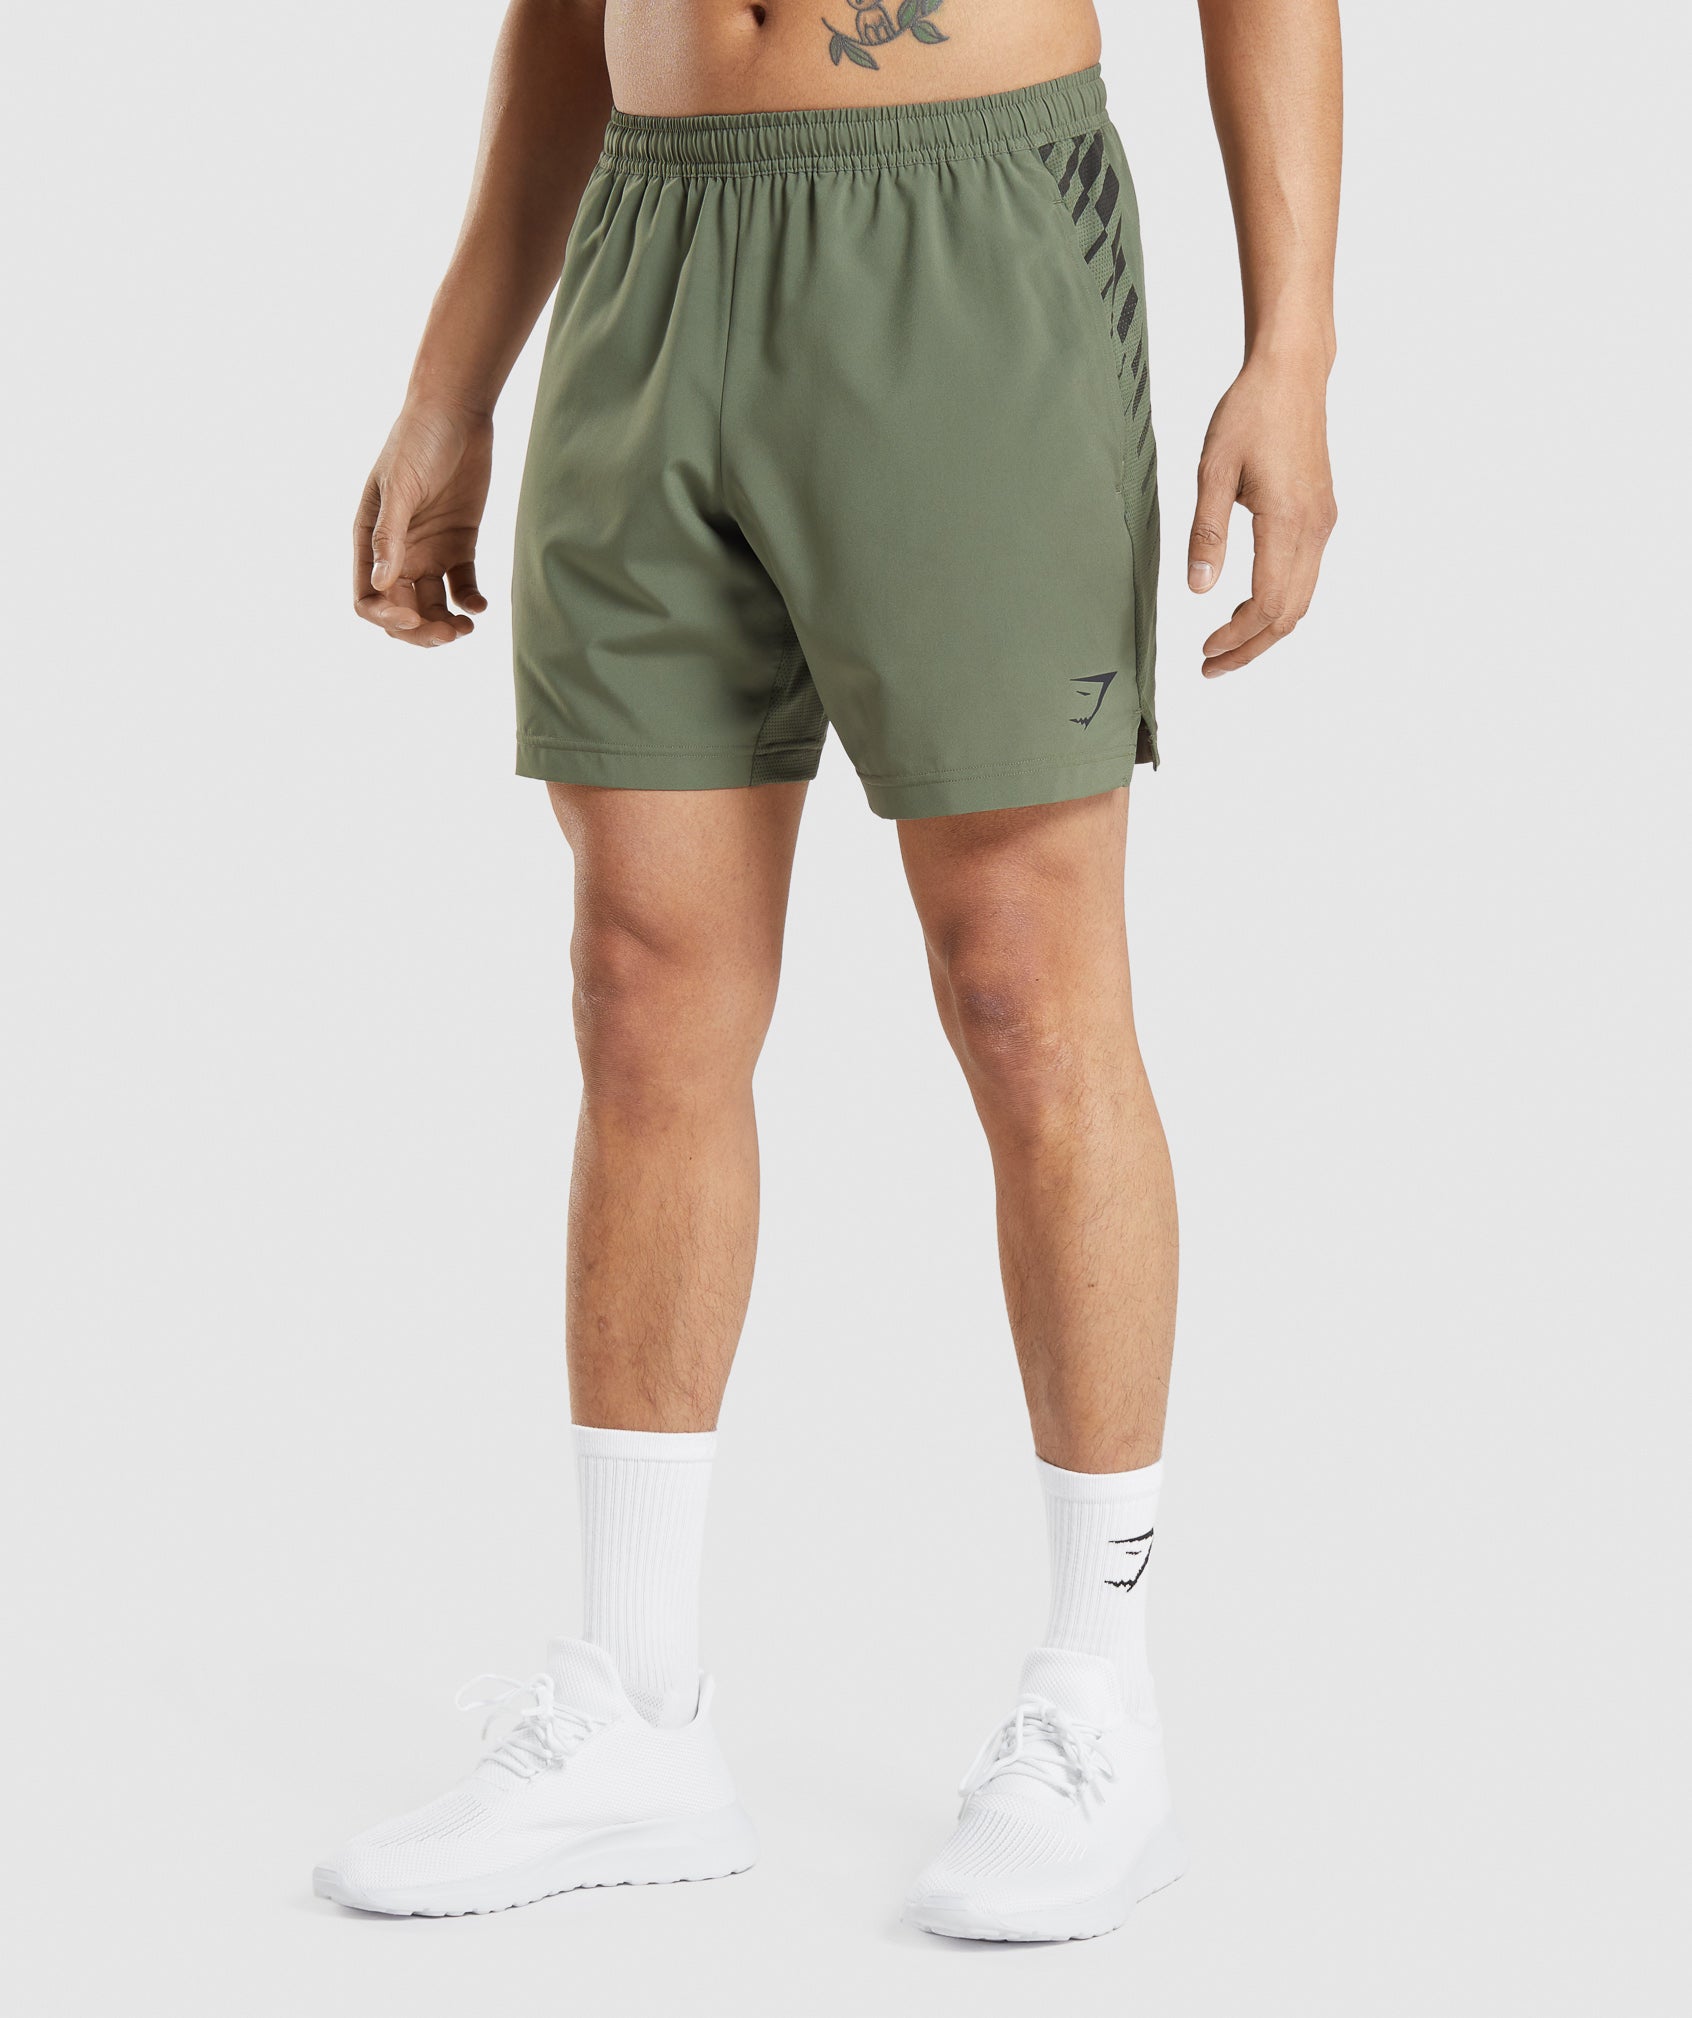 Gymshark Sport Stripe 7 Shorts - Core Olive